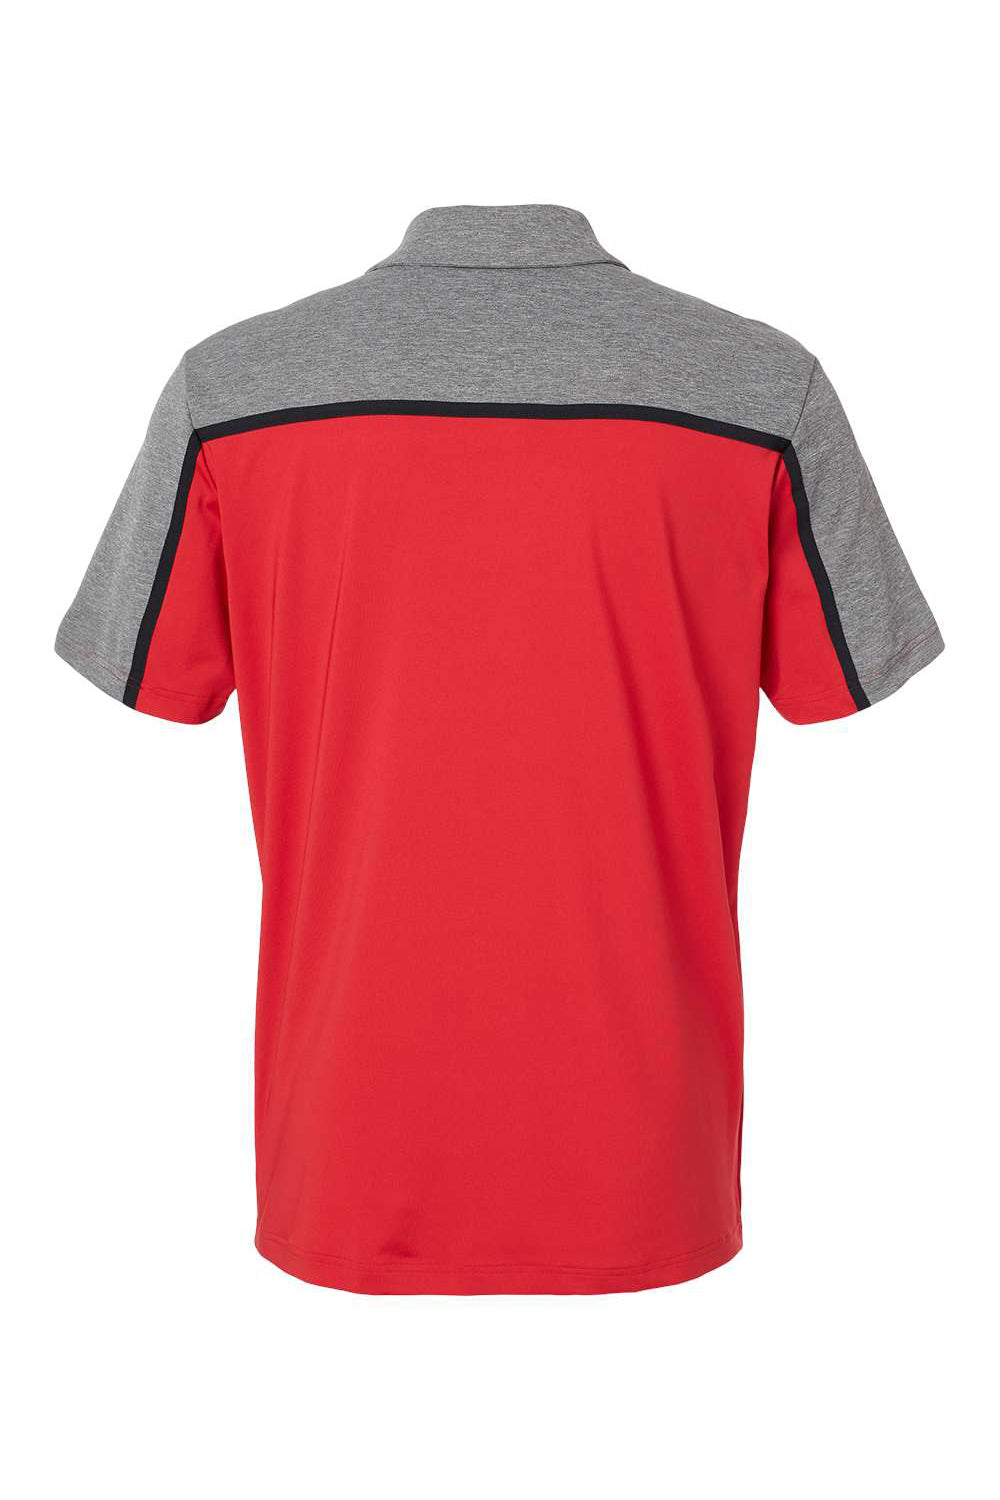 Adidas A512 Mens Ultimate Colorblock Moisture Wicking Short Sleeve Polo Shirt Collegiate Red/Black/Grey Melange Flat Back